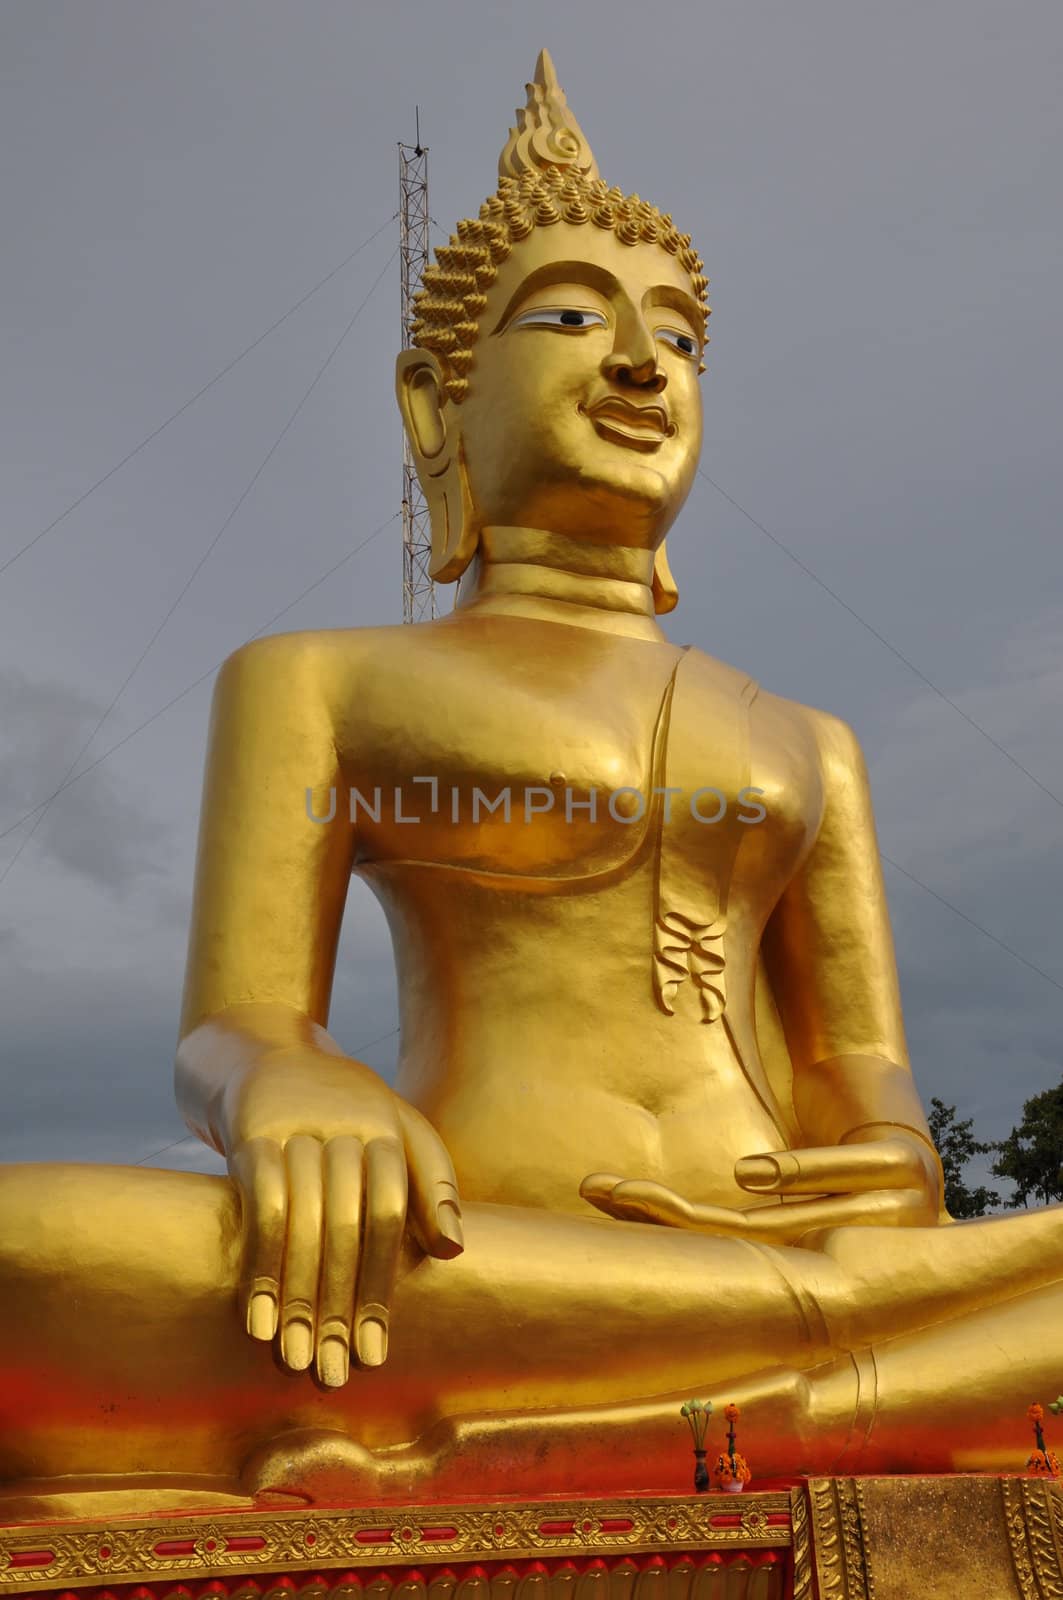 The site of Big Buddha in Pattaya, Thailand